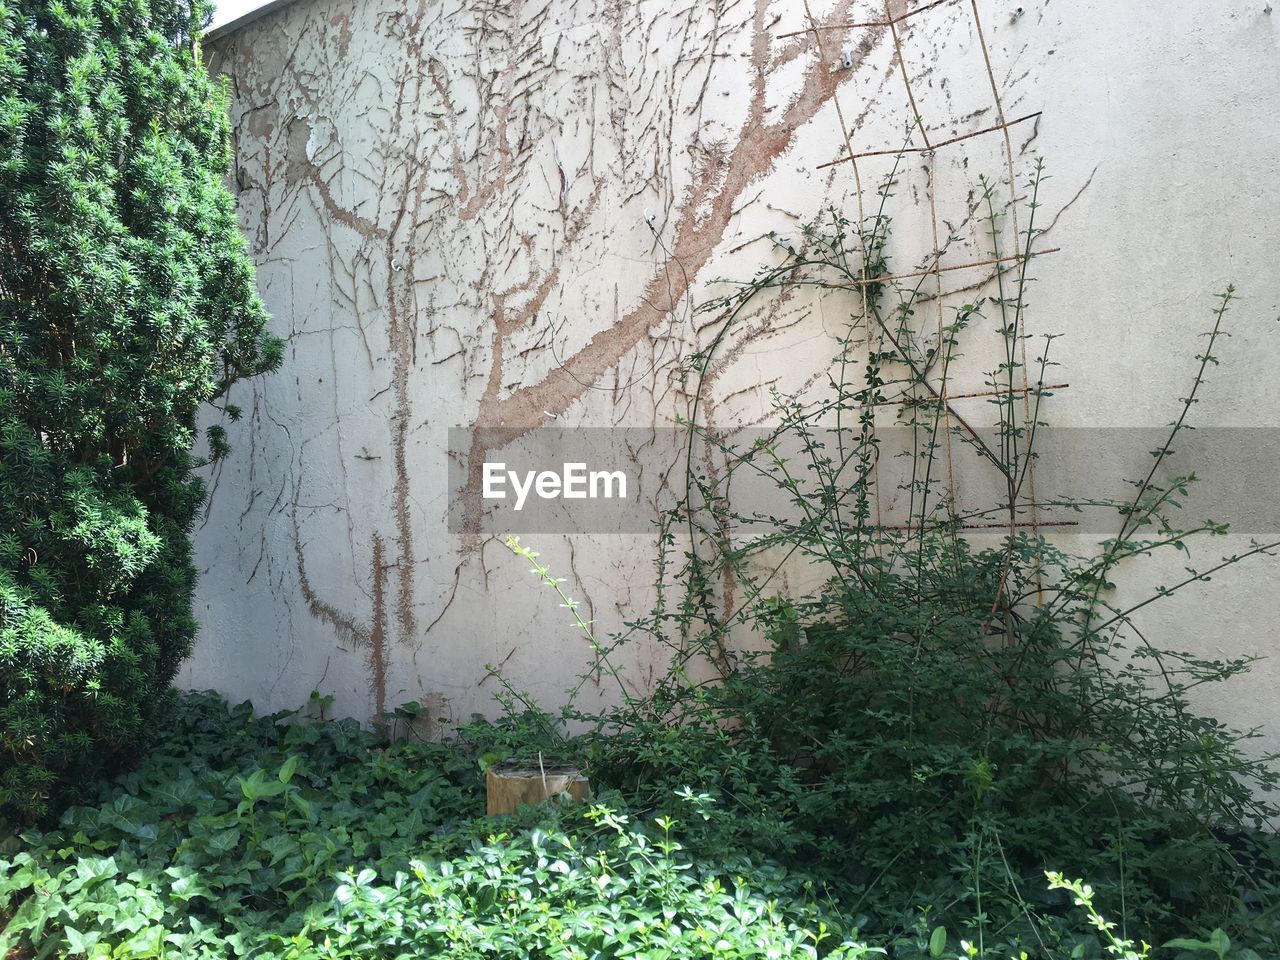 Ivy growing on tree